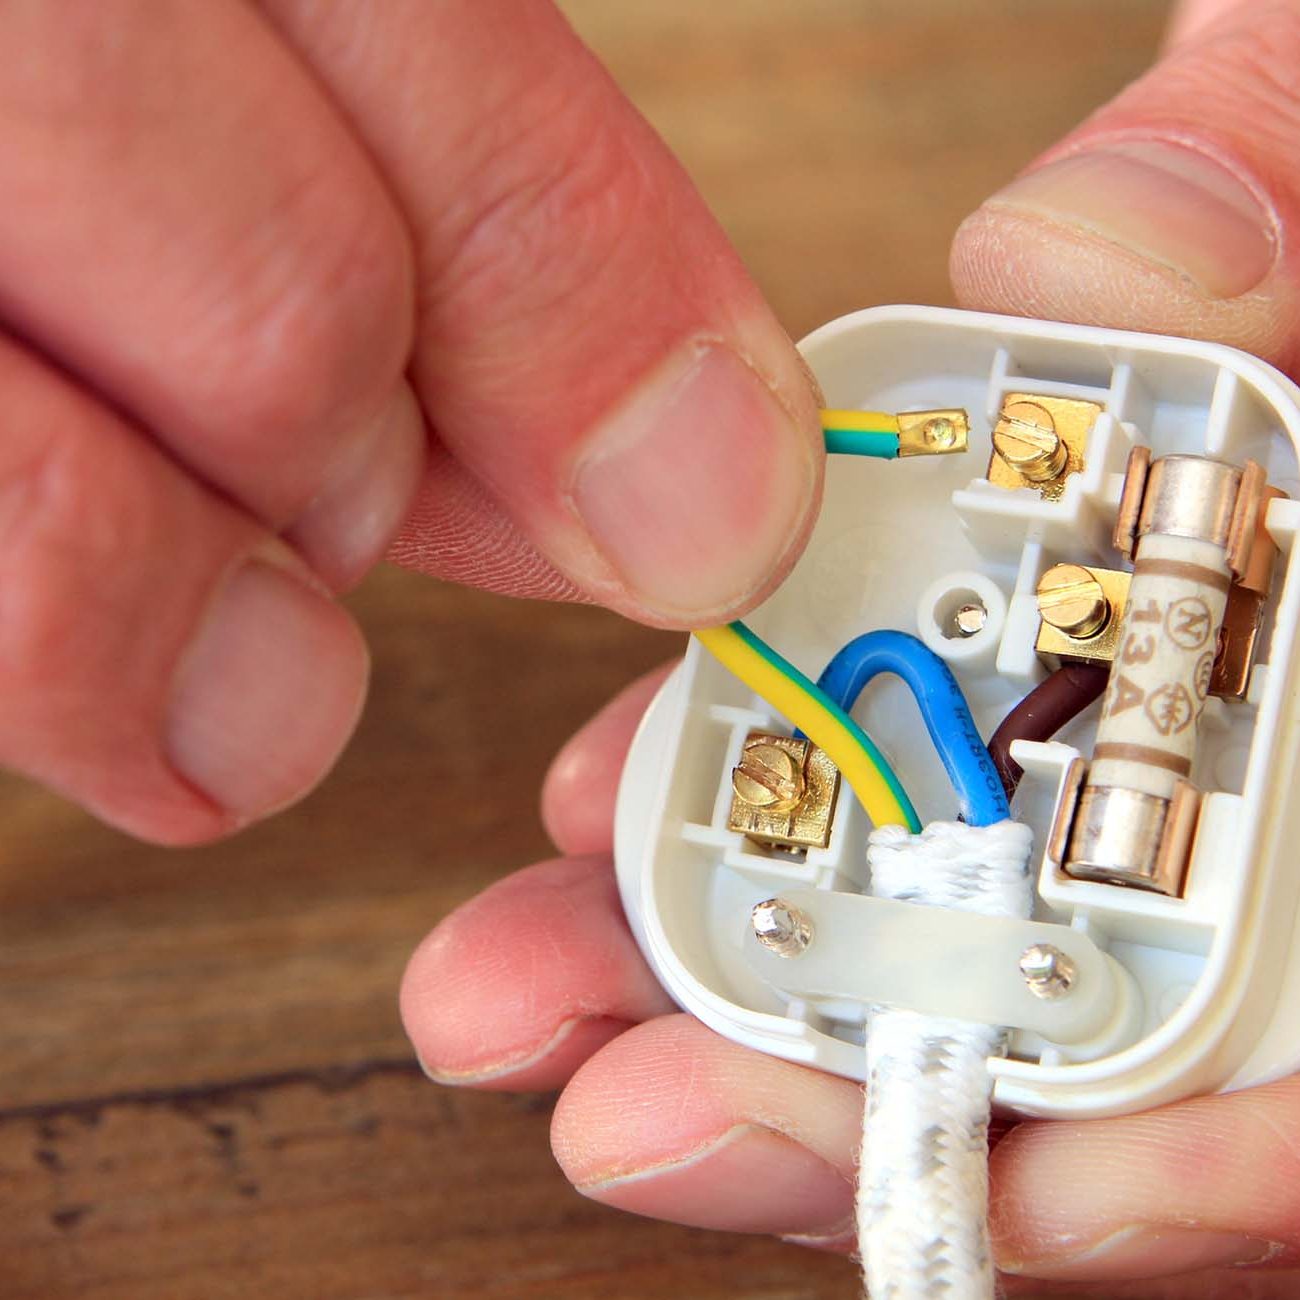 Rewiring a UK 13 amp domestic electric plug